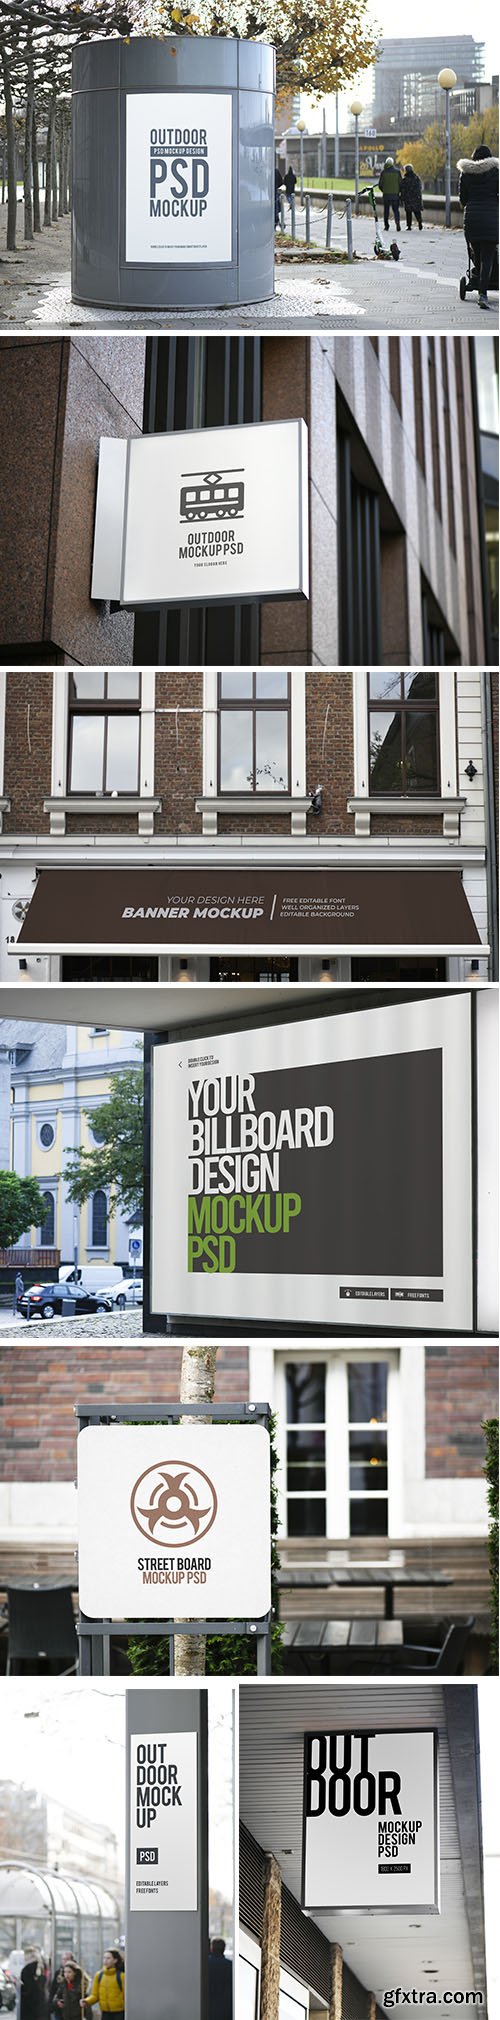 Outside Advertising Board PSD Mockup Set